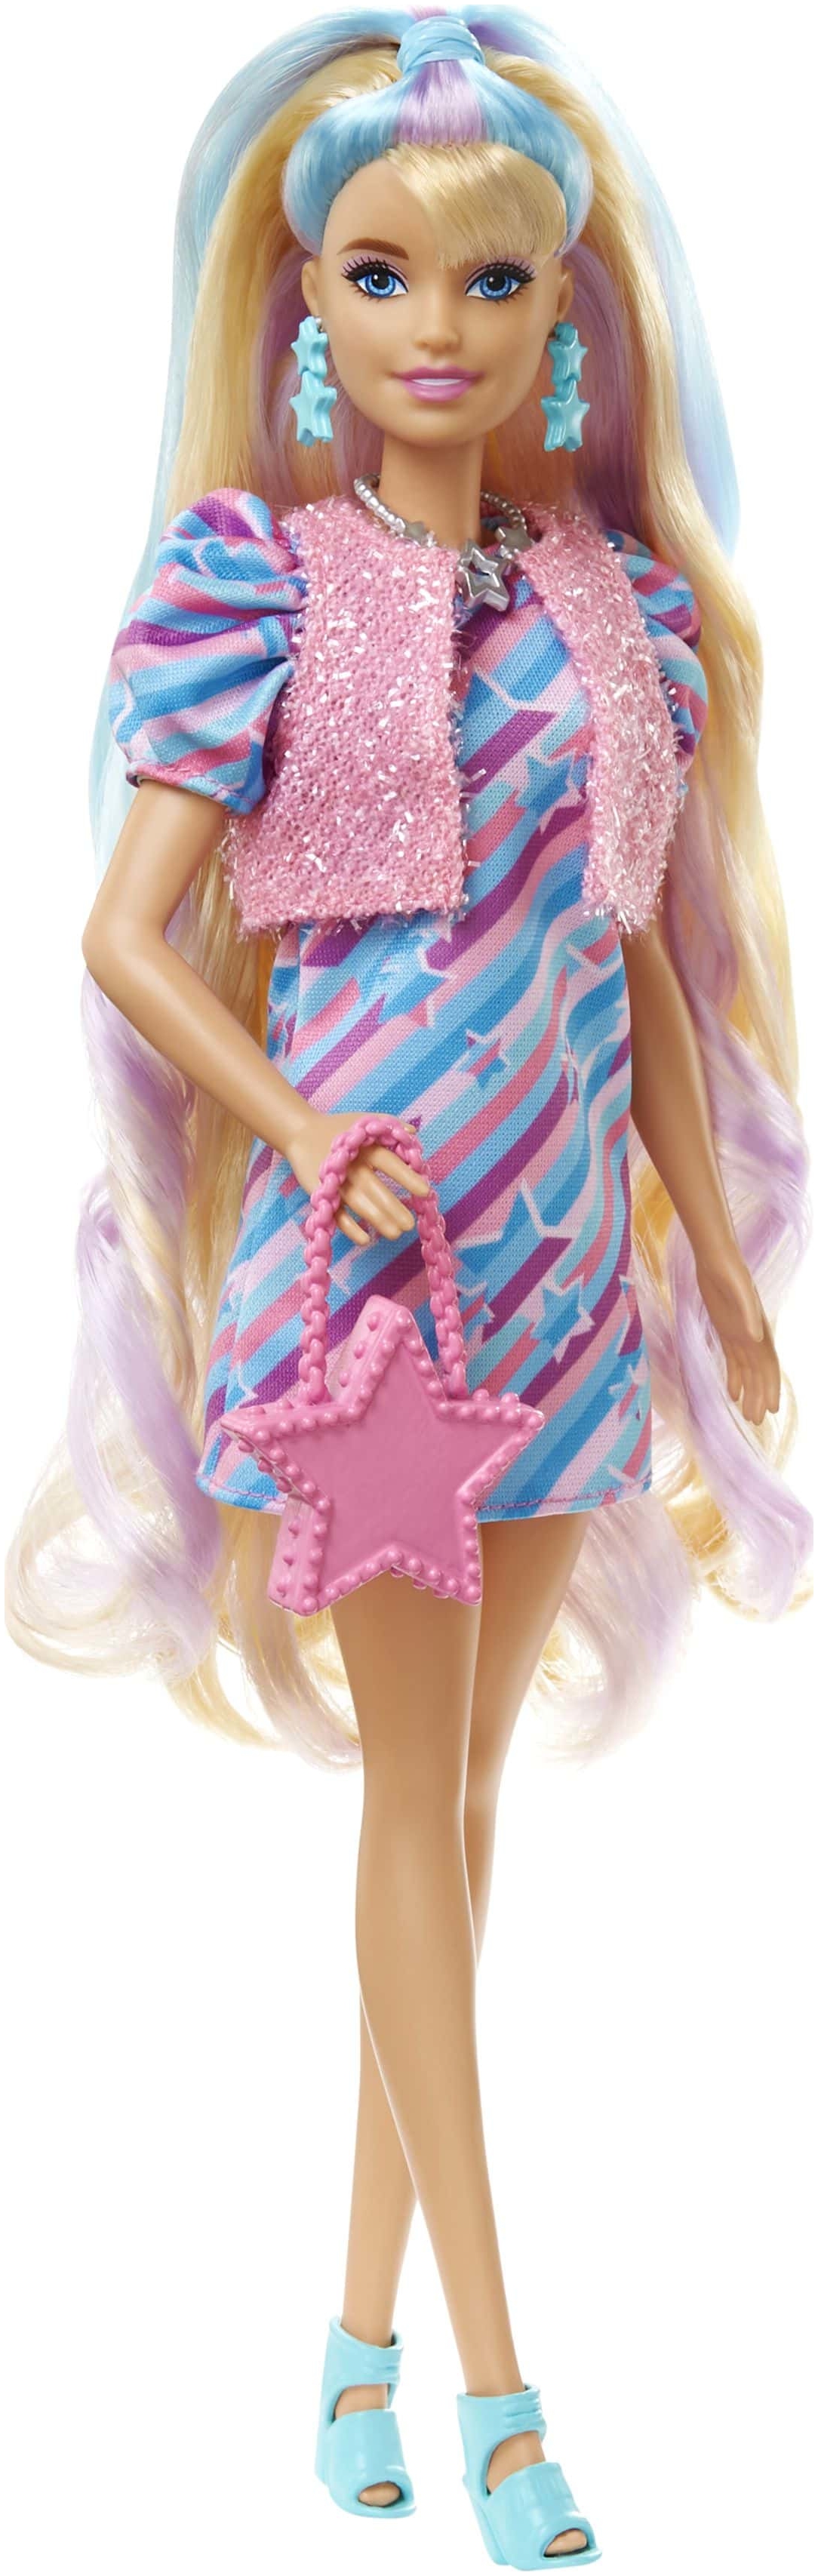 Hollywood Hair Barbie Doll Online Sale, Save 42% | jlcatj.gob.mx